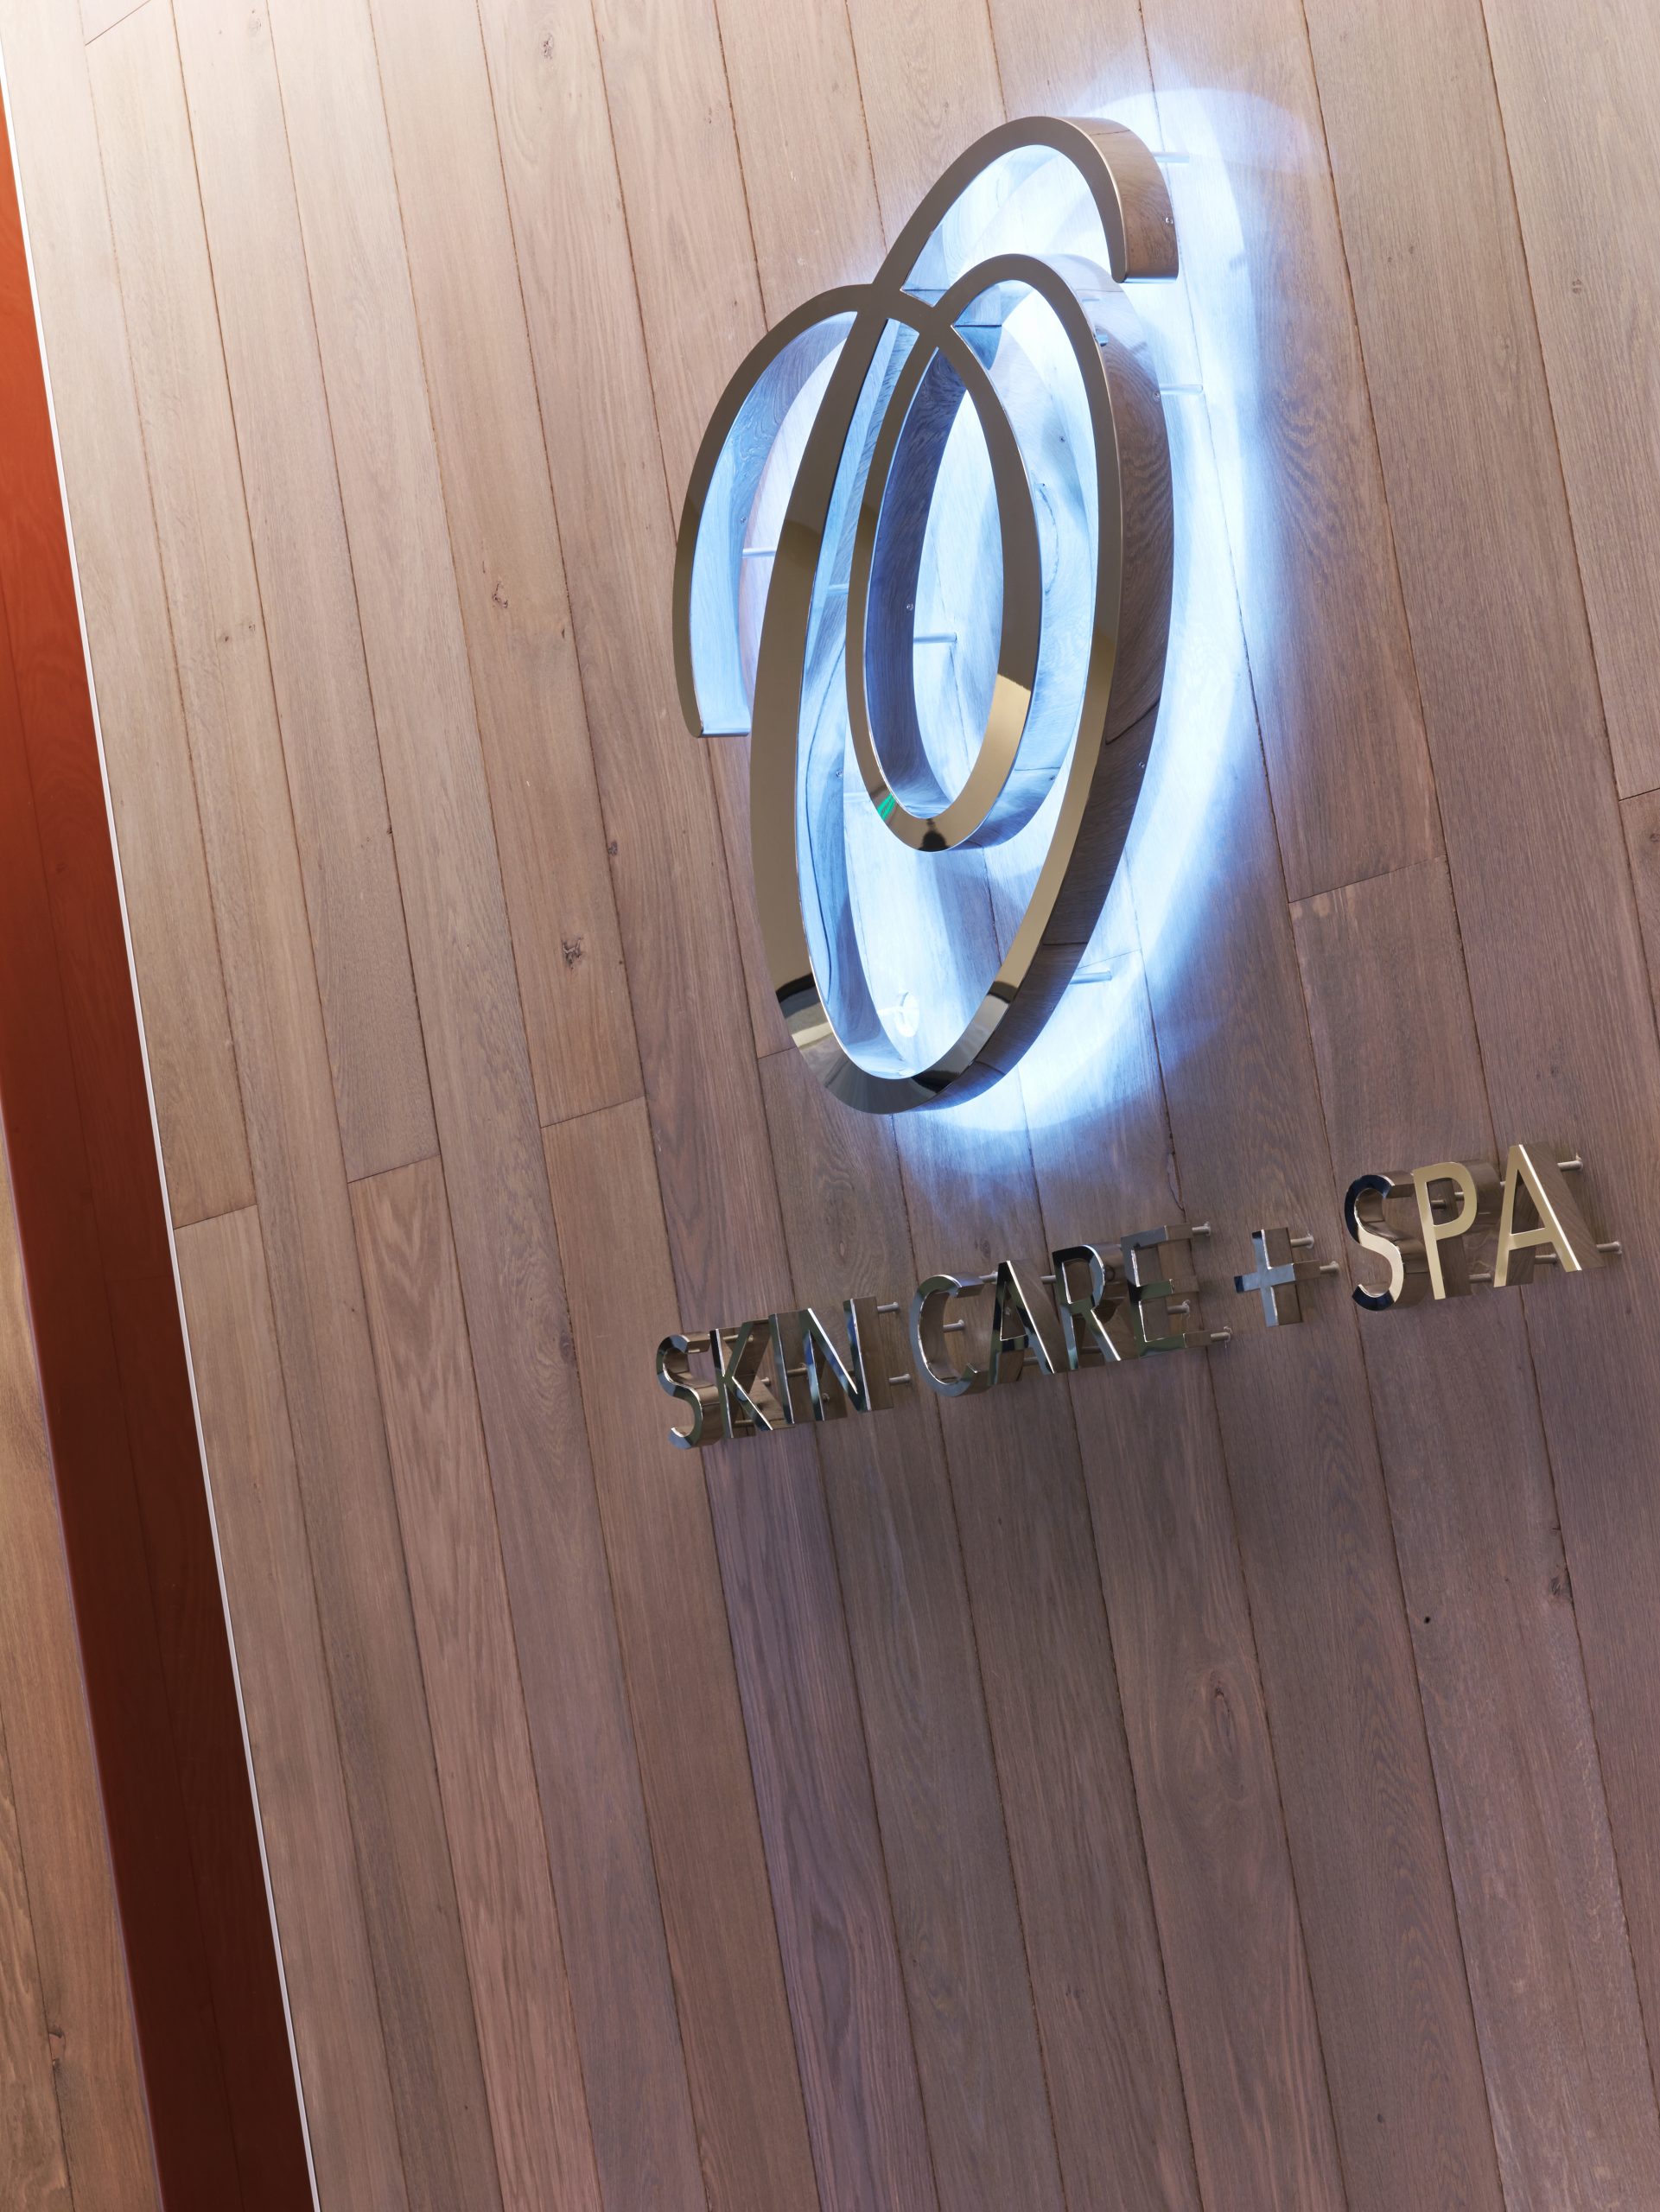 o skin care + spa | entry sign | image 5